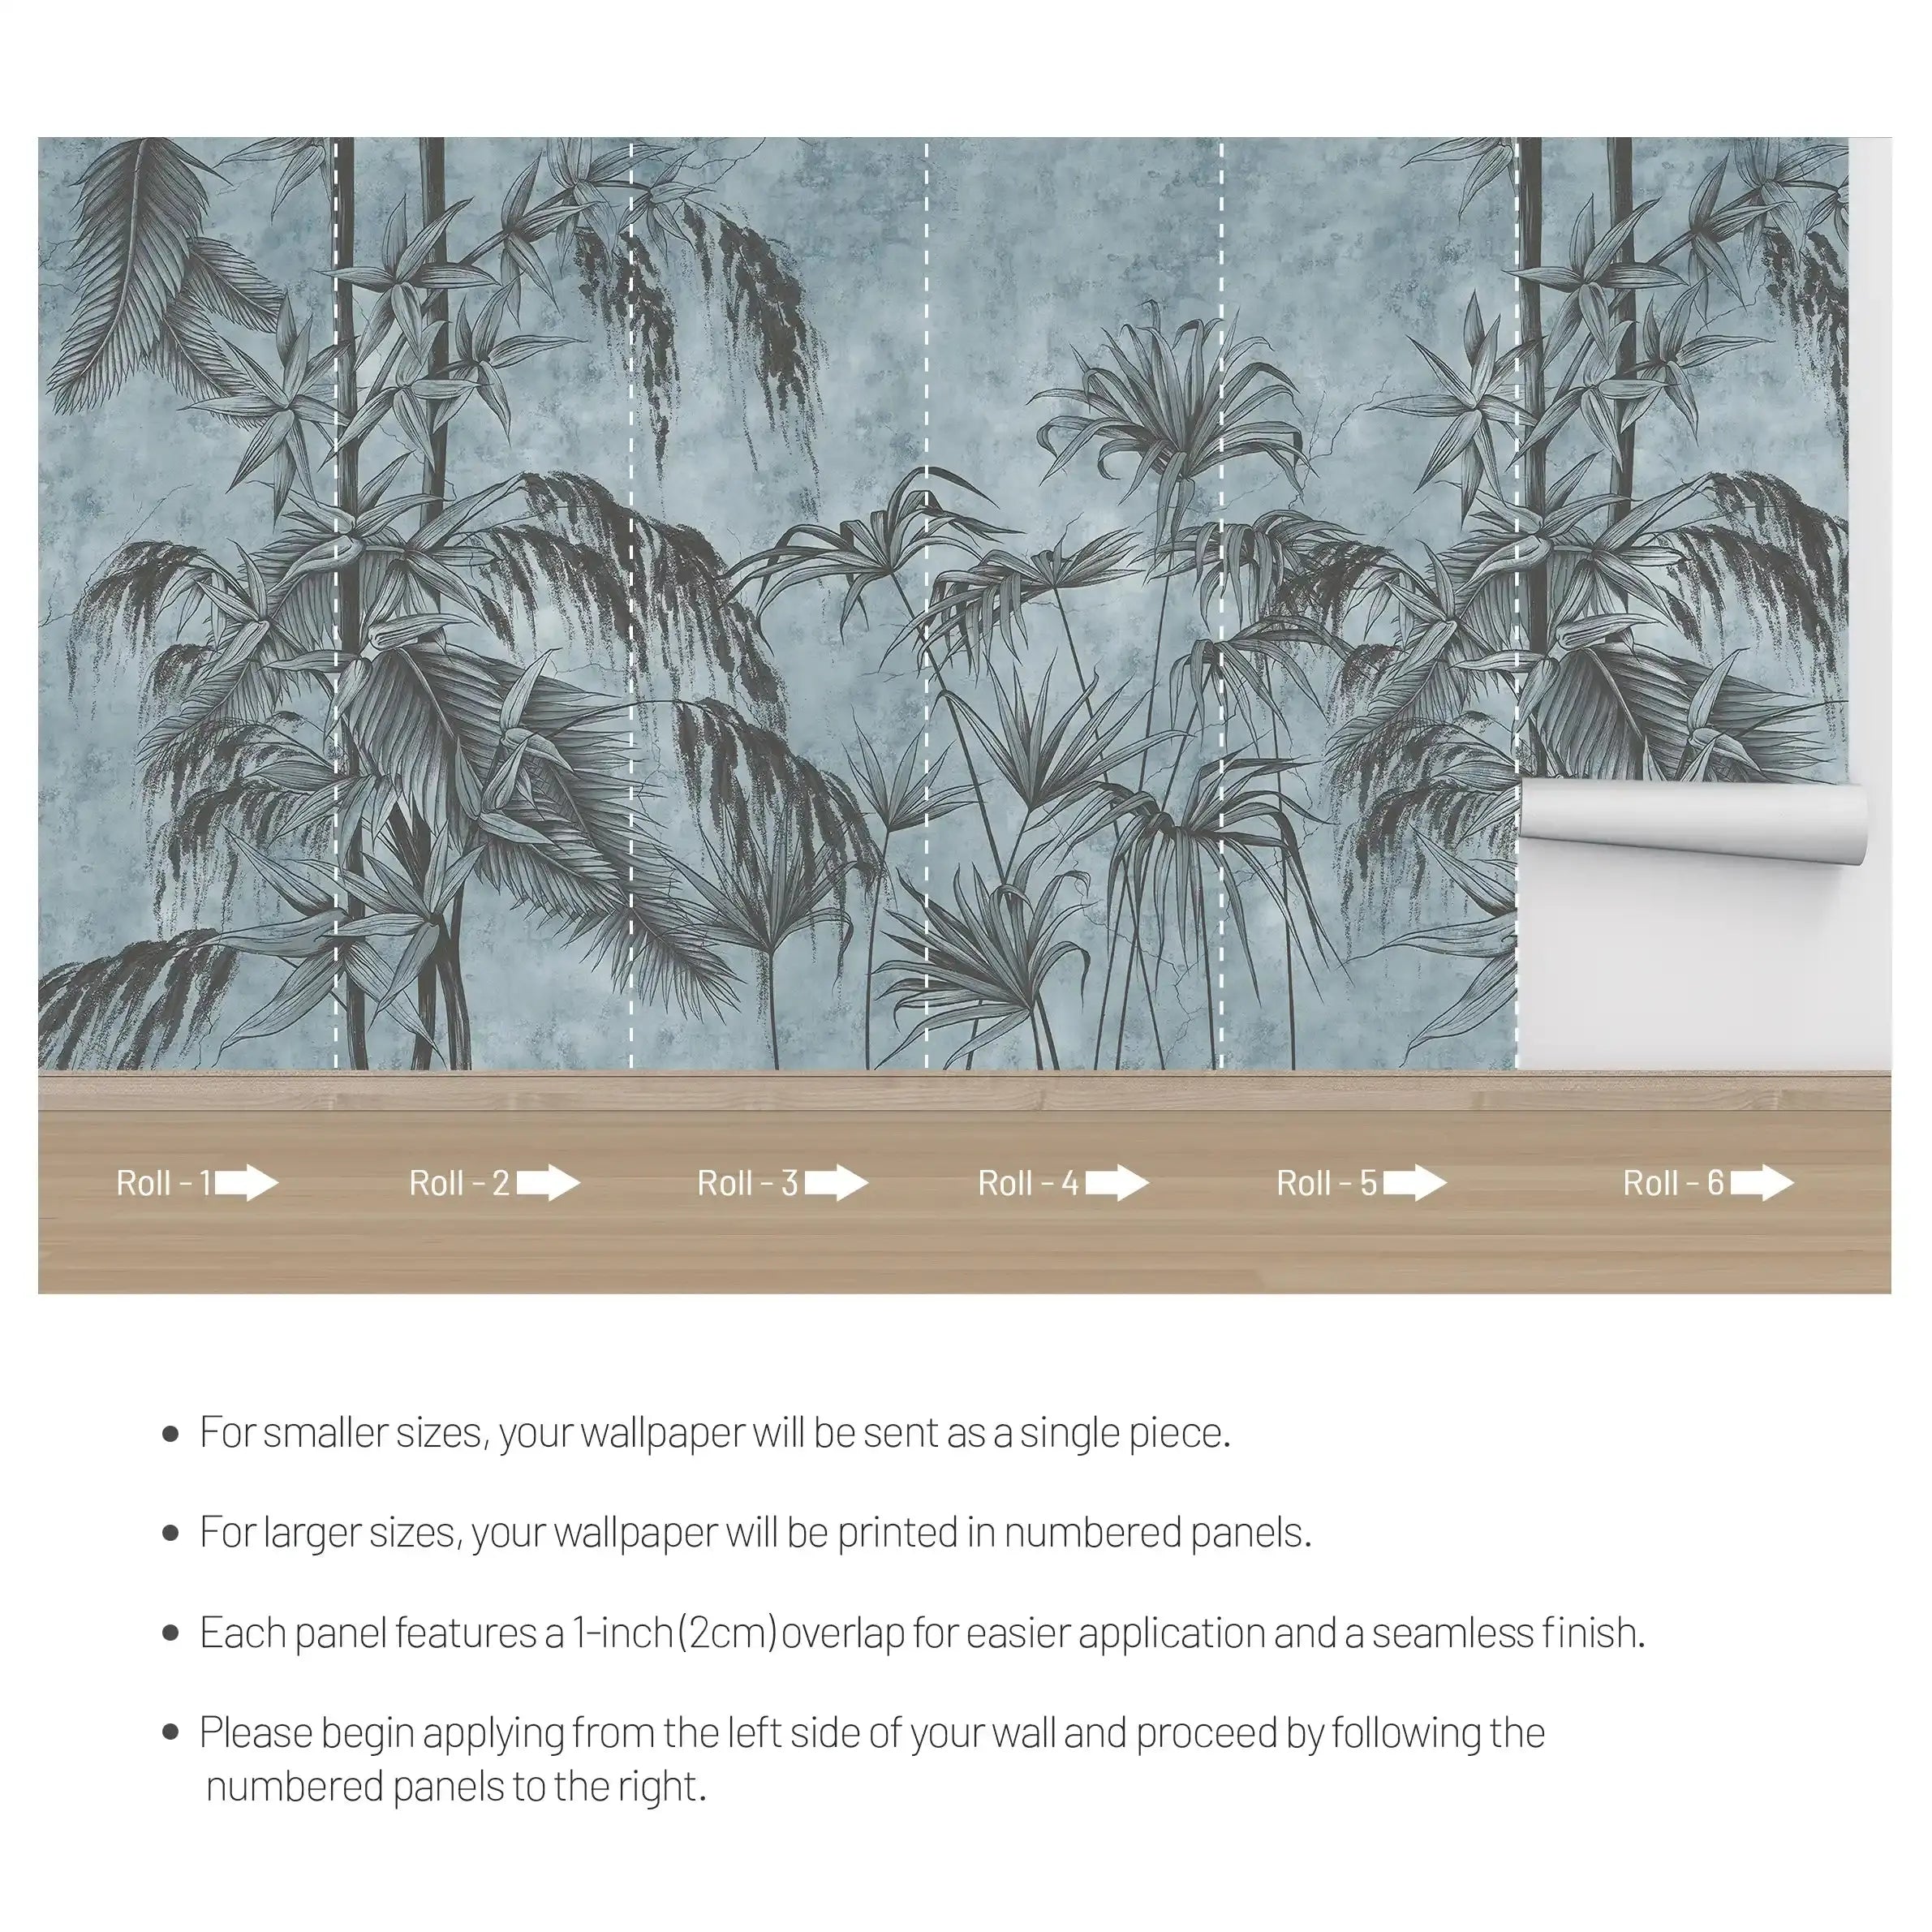 3001-C / Botanical Peel and Stick Wallpaper - Wild Floral, Tropical Leaf Wall Mural, Self Adhesive & Removable Design for Room, Shelf, Drawer Liner - Artevella